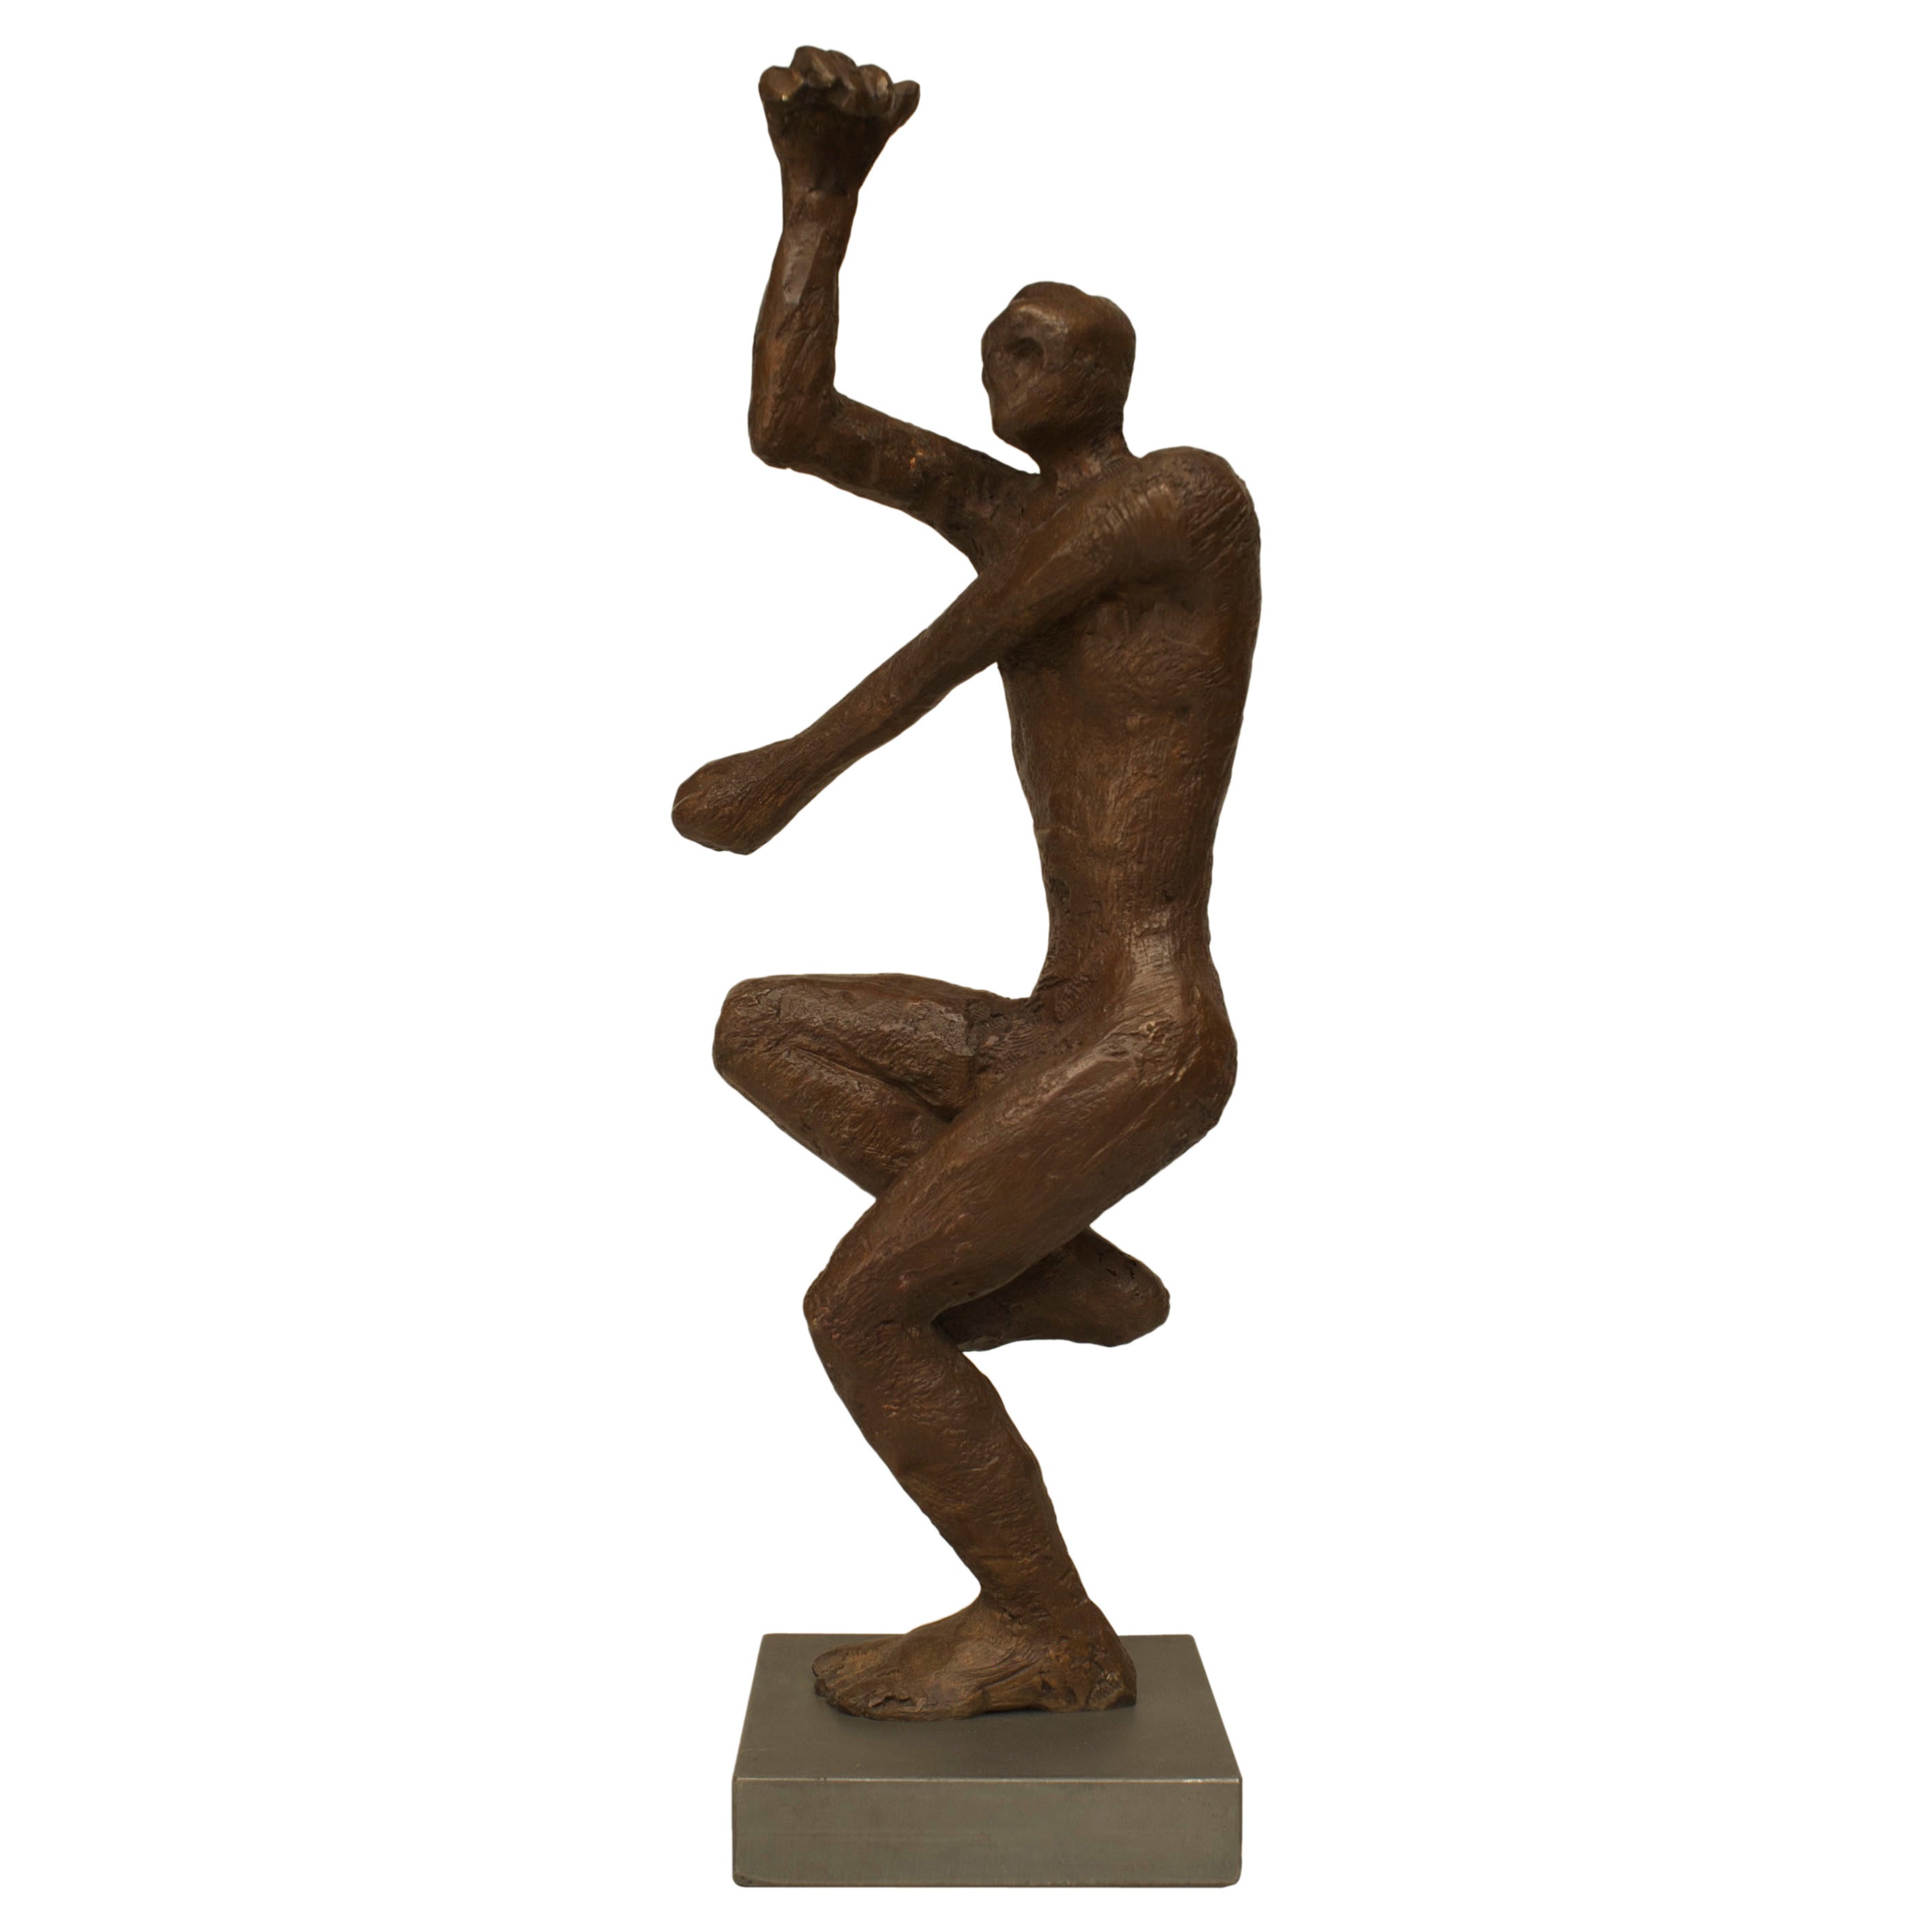 American Carol Bruns' Small Bronze "Jolting Man" Sculpture, 2000